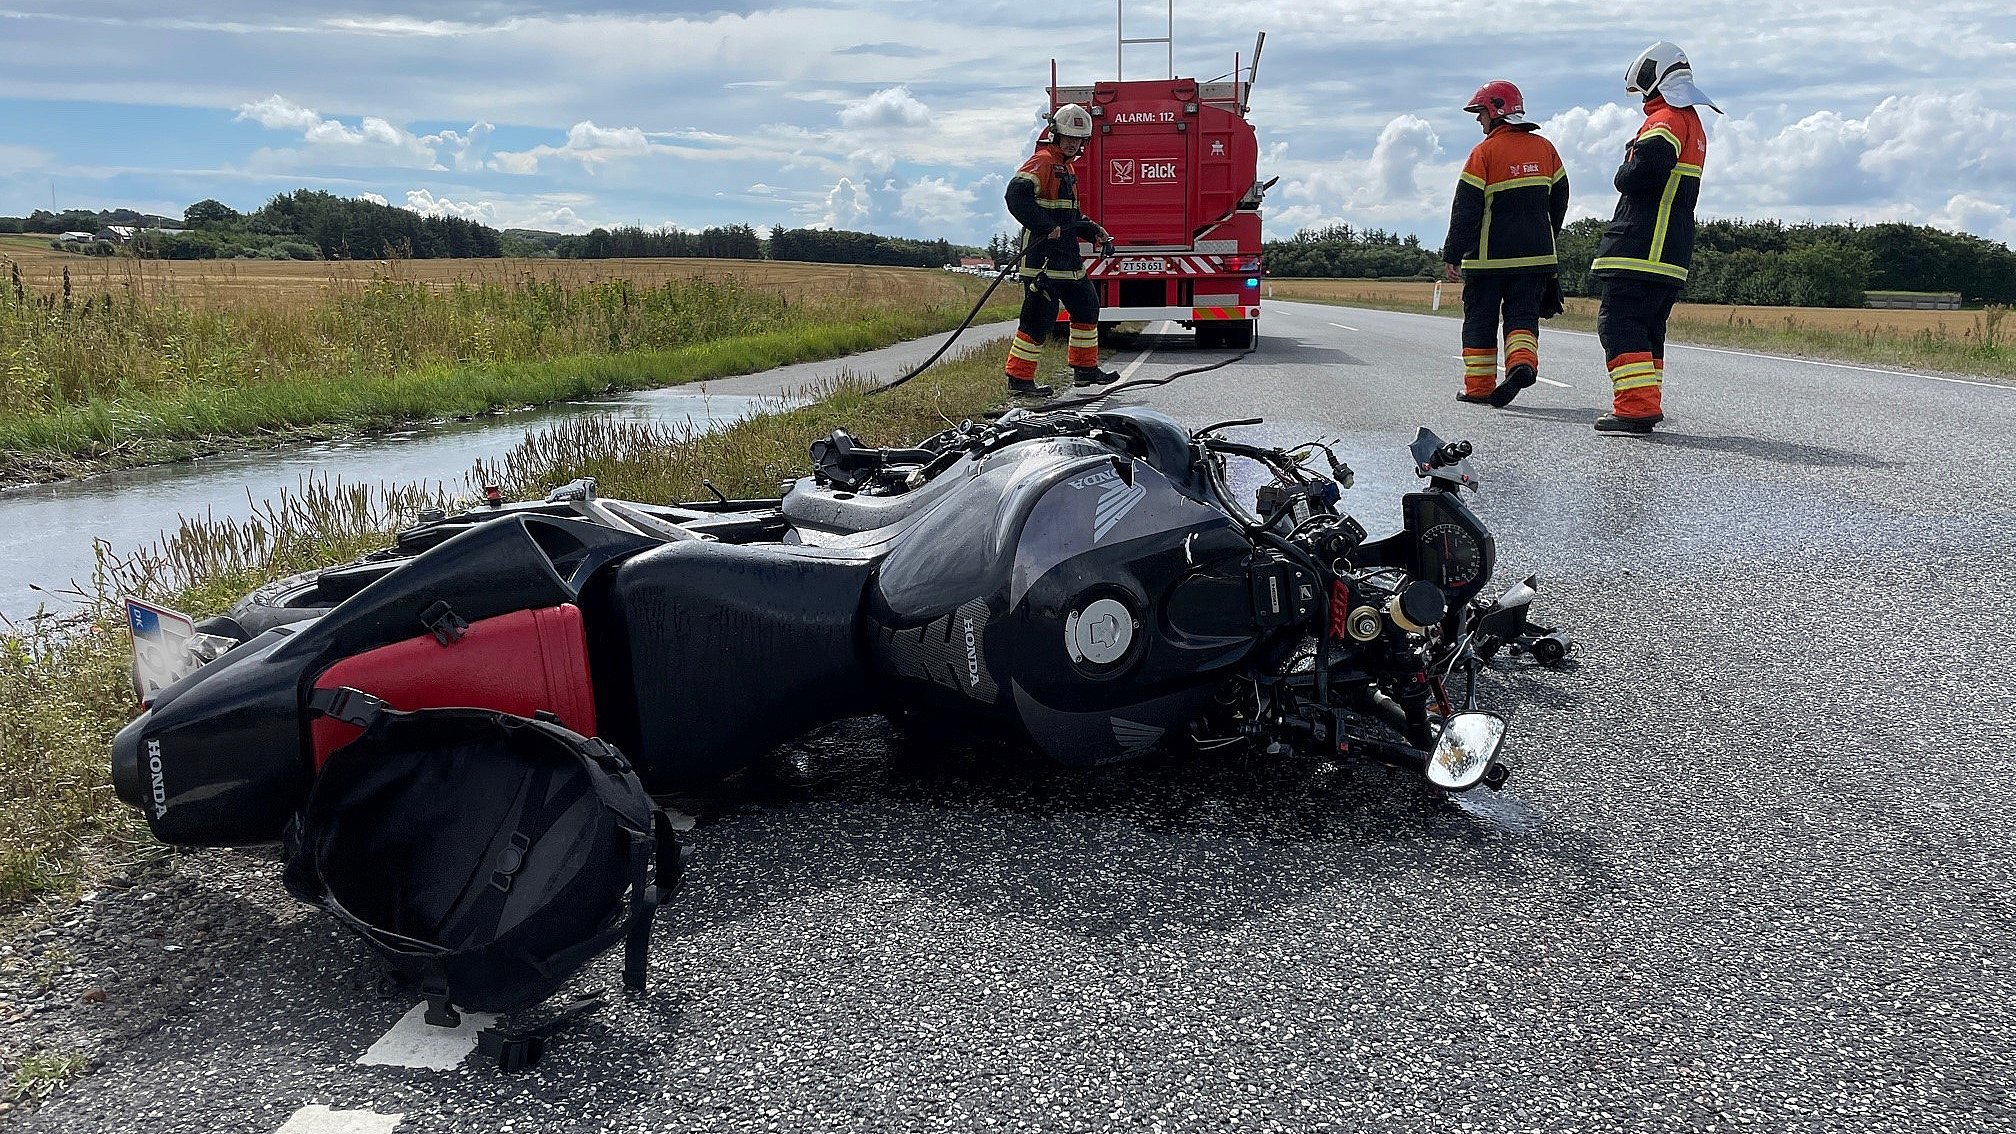 R bule Bar 47-årig motorcyklist omkommet i trafikulykke | TV2 Nord